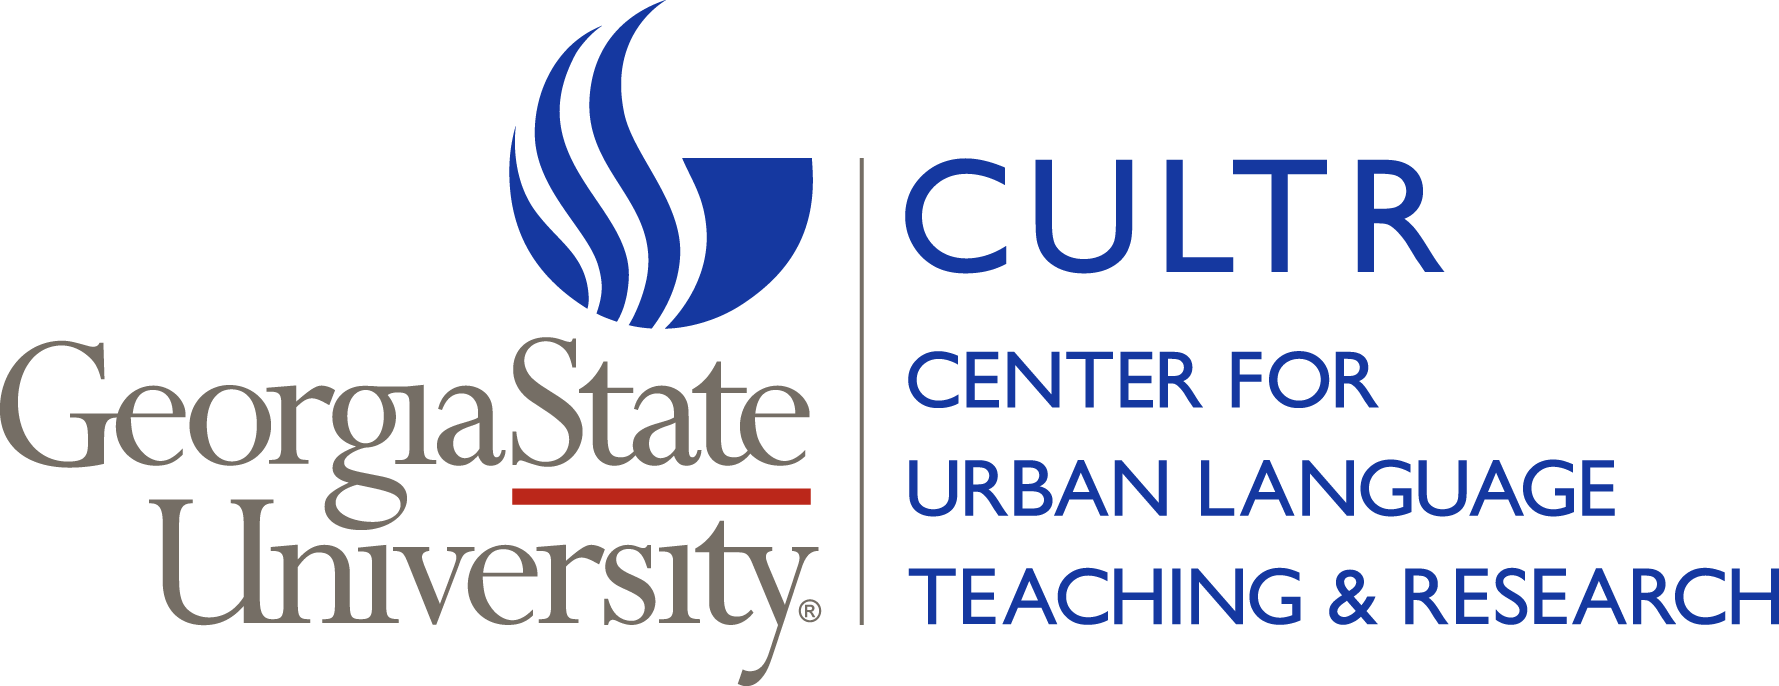 CULTR logo